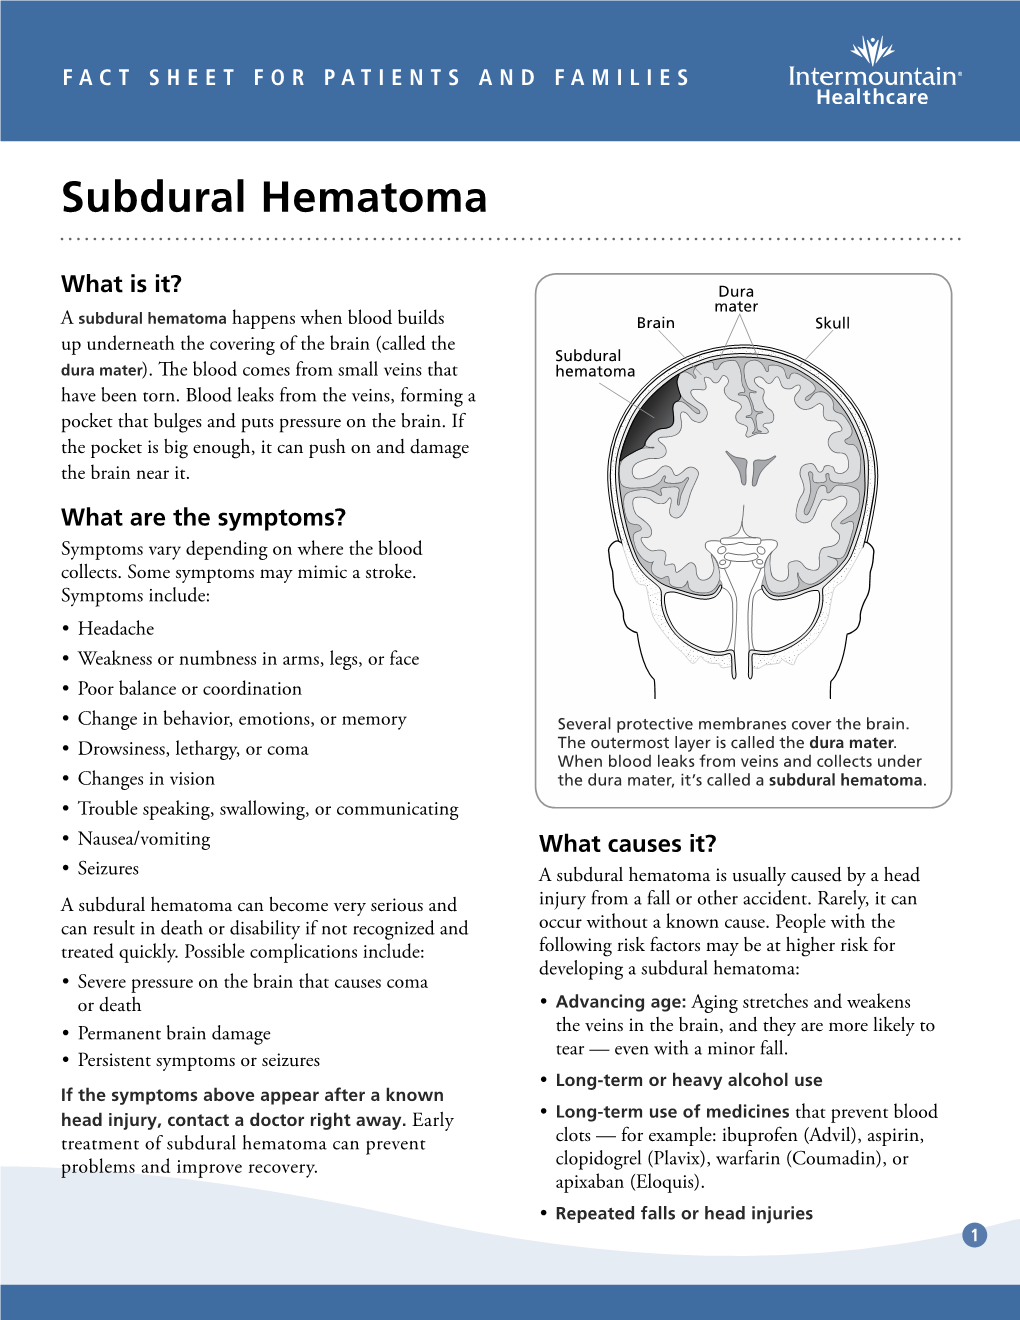 Subdural Hematoma Fact Sheet